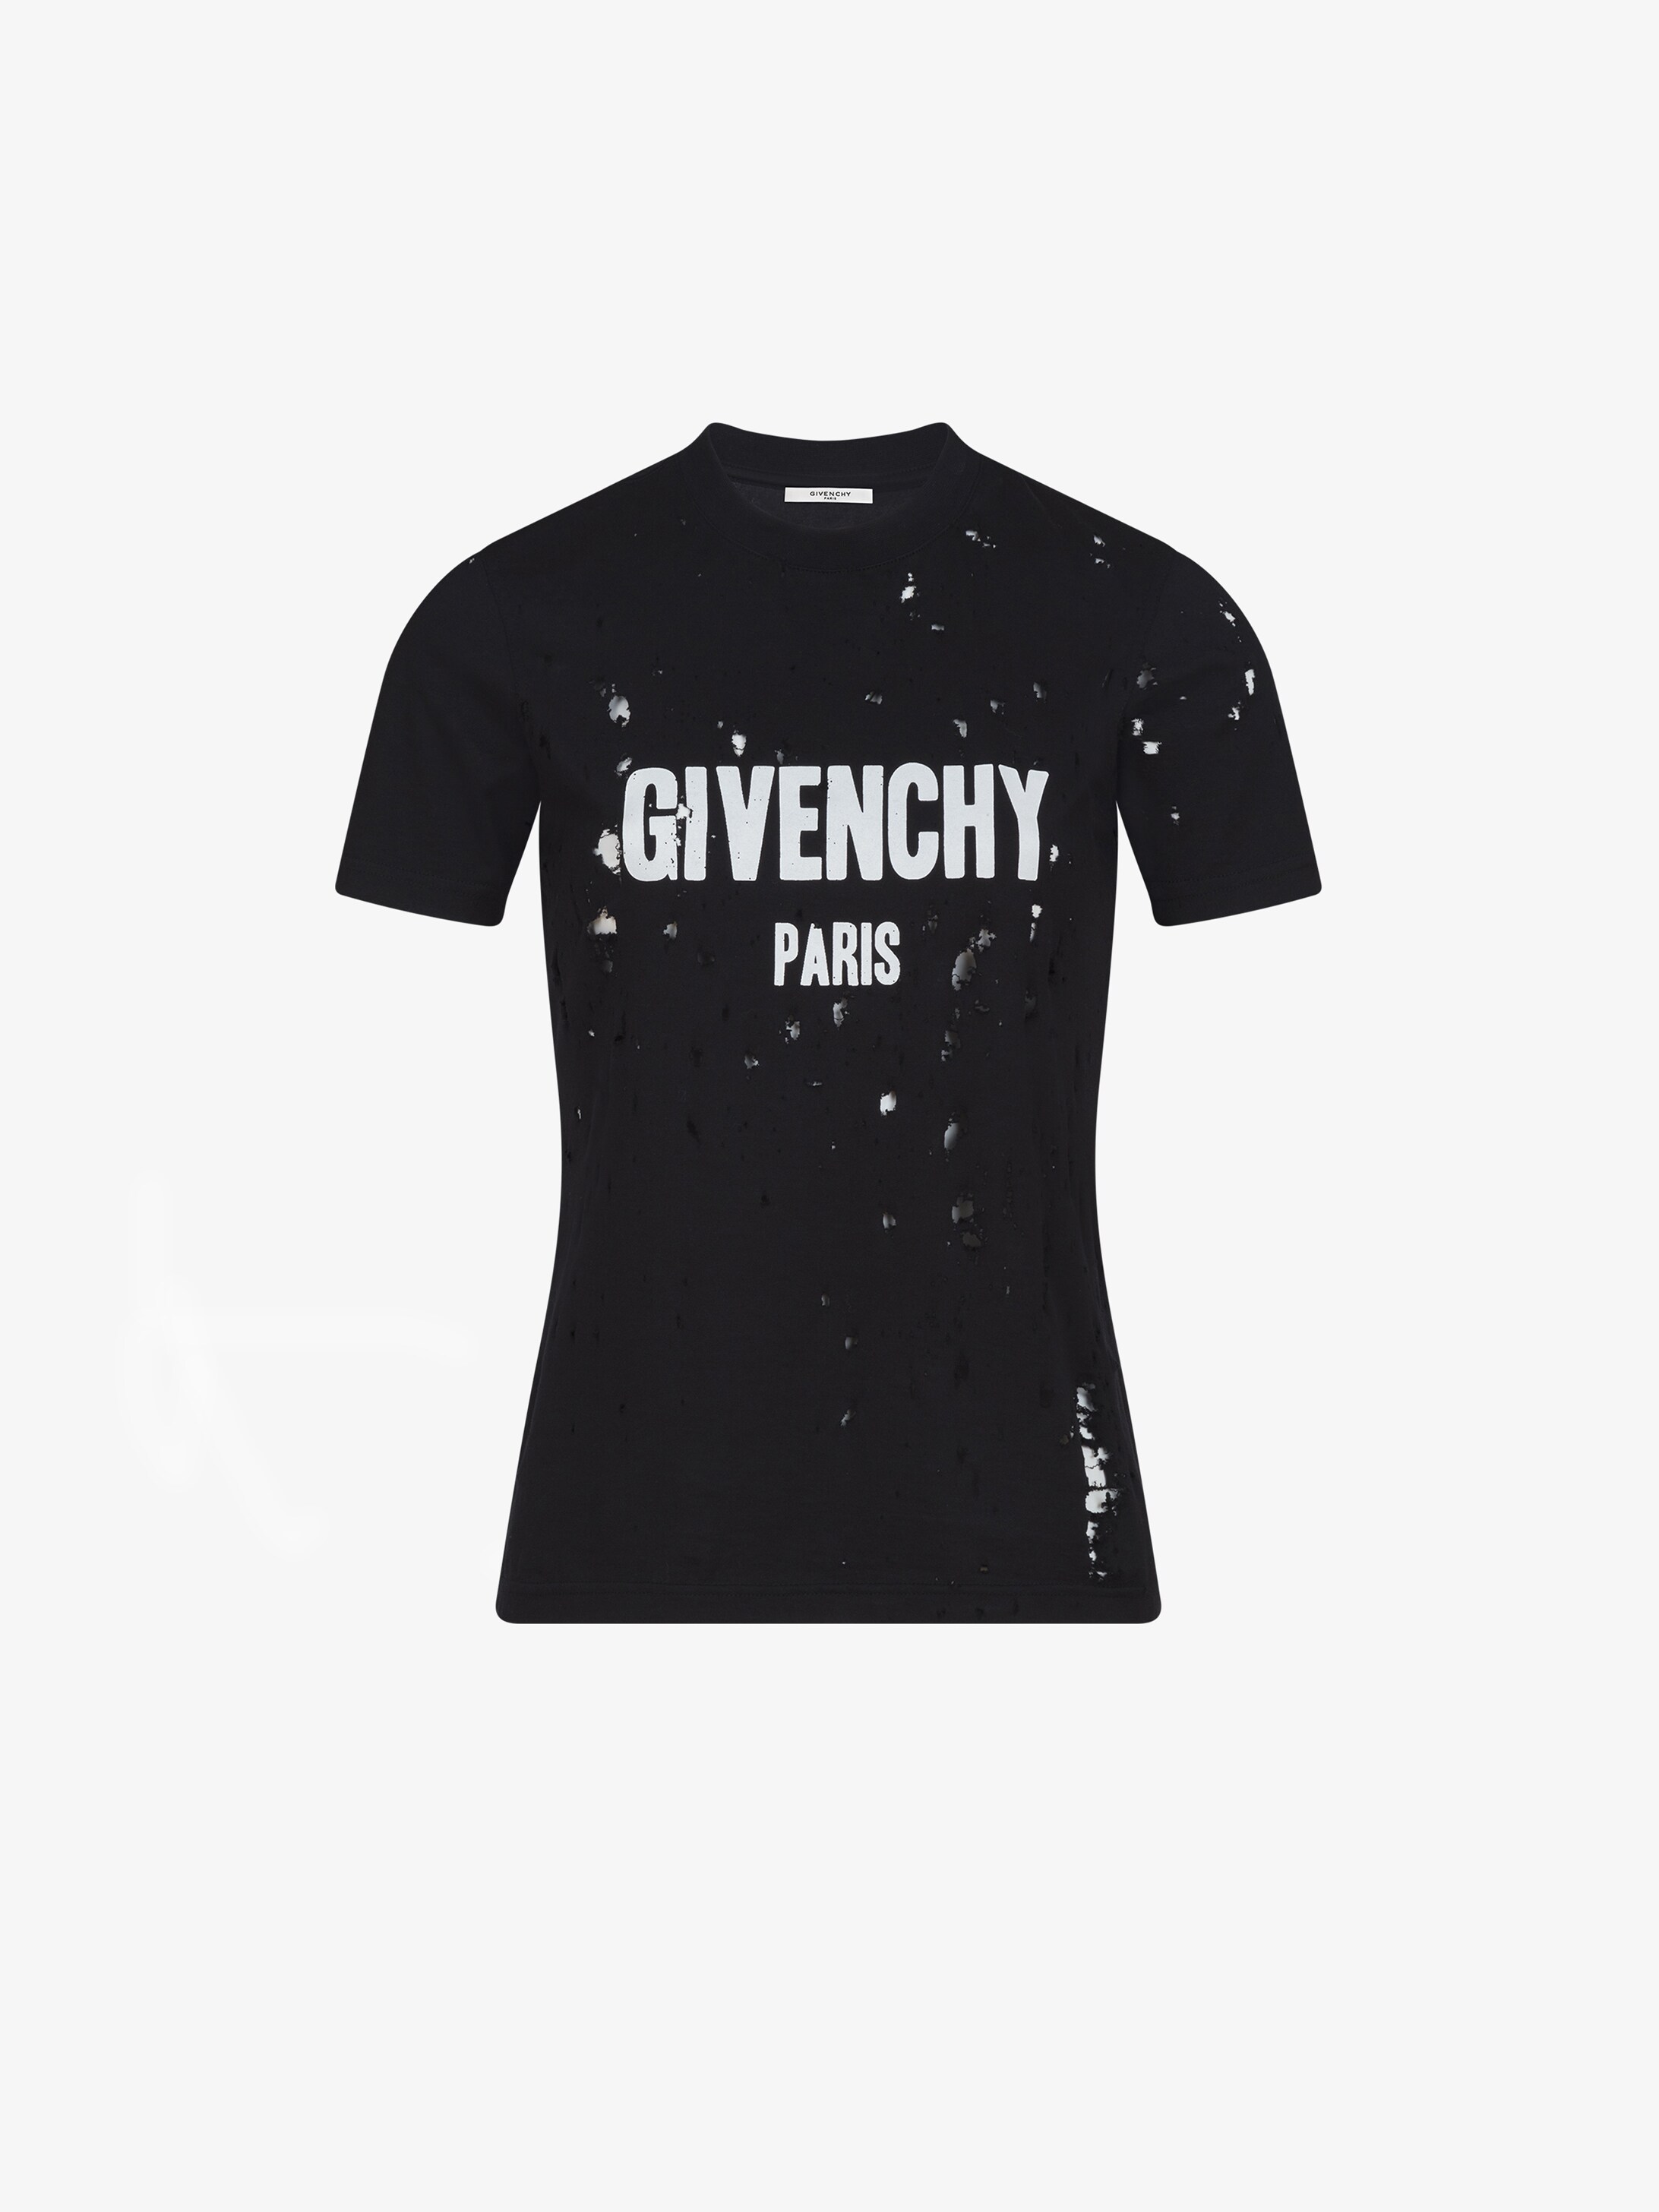 Givenchy PARIS destroyed T-shirt 